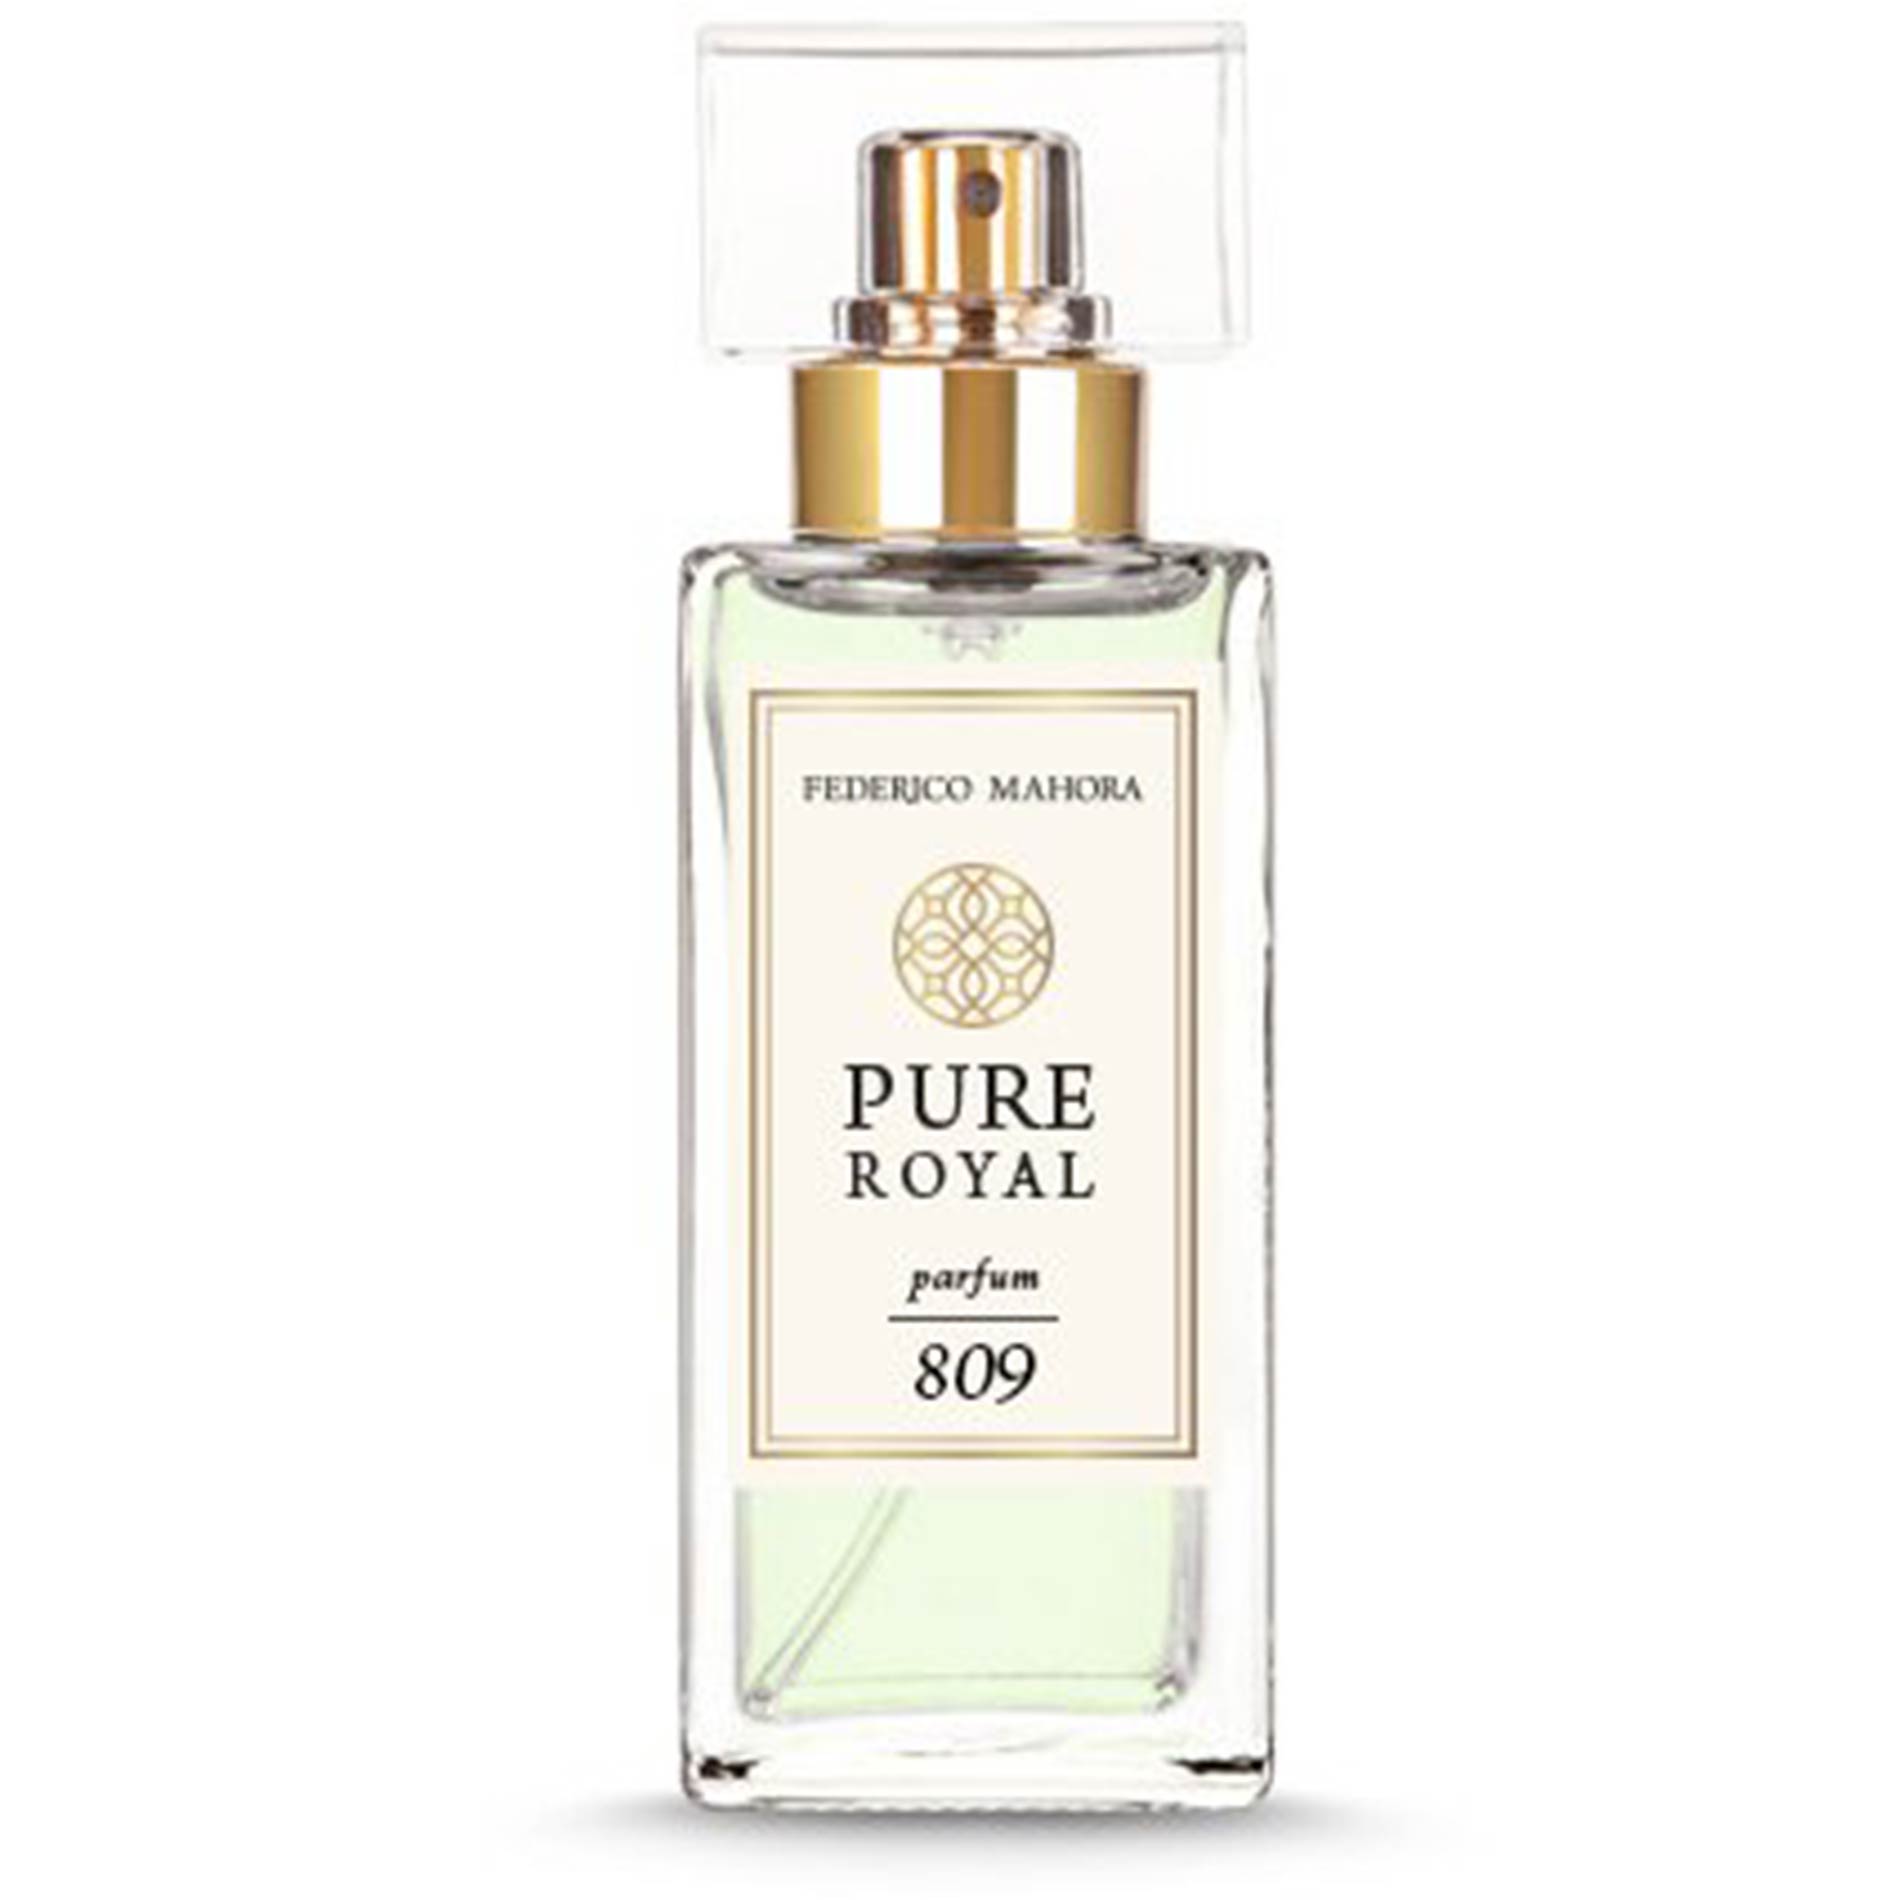 PURE ROYAL 809 Parfum by Federico Mahora